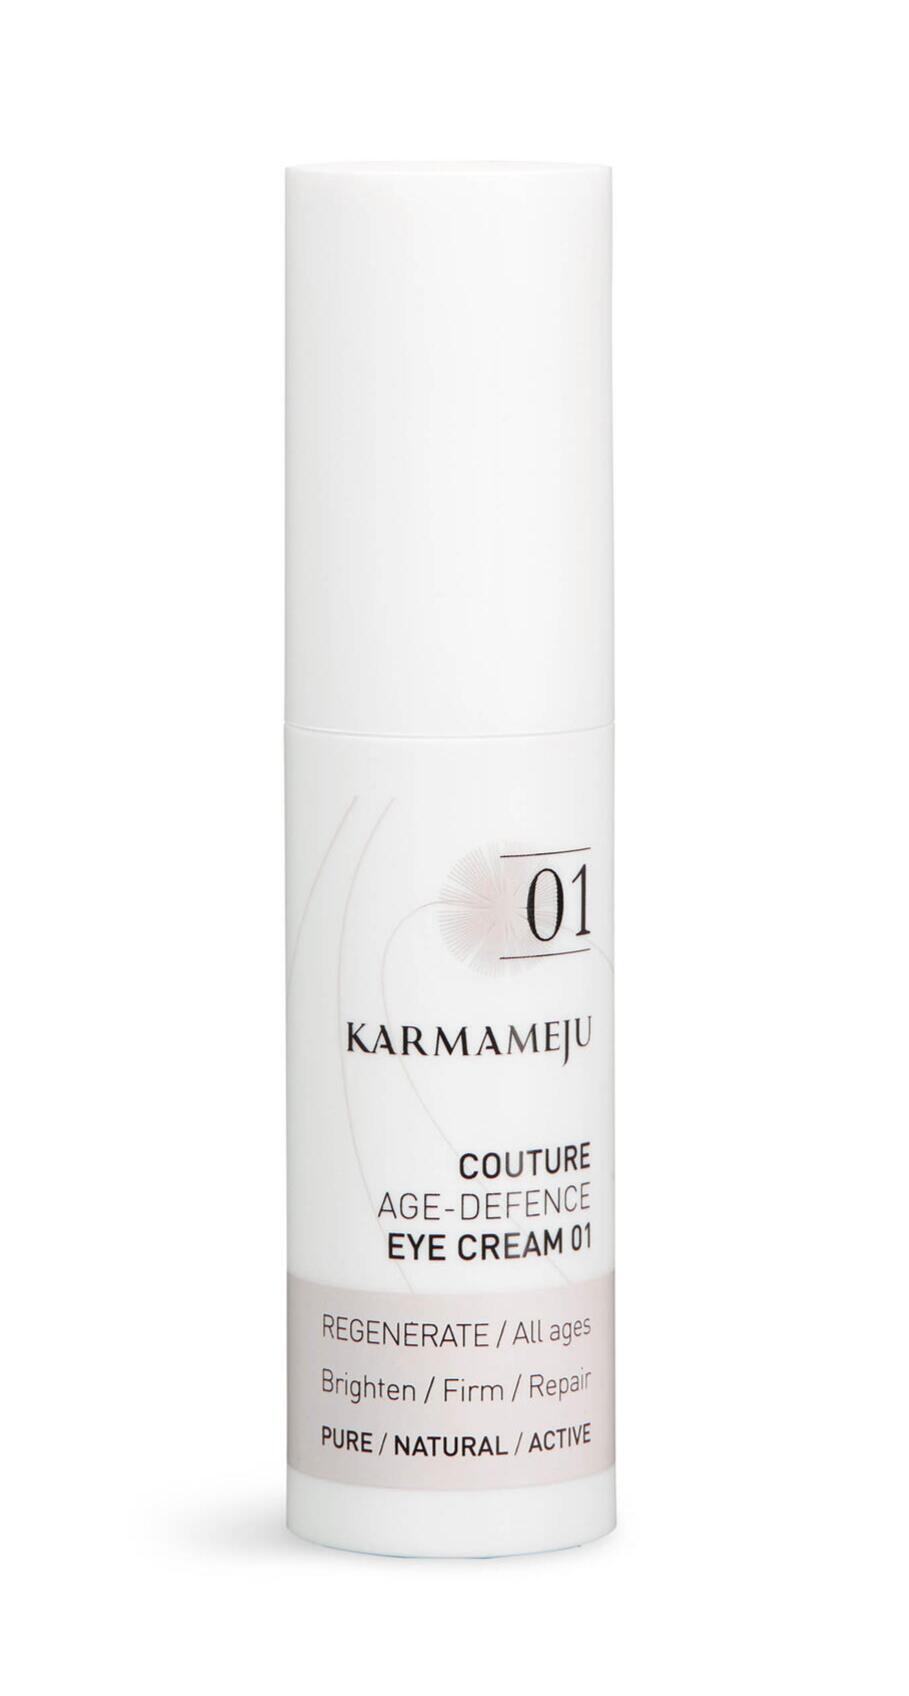 Se Karmameju Couture Eye Cream 01, 15ml. hos Ren-velvaereshop.dk